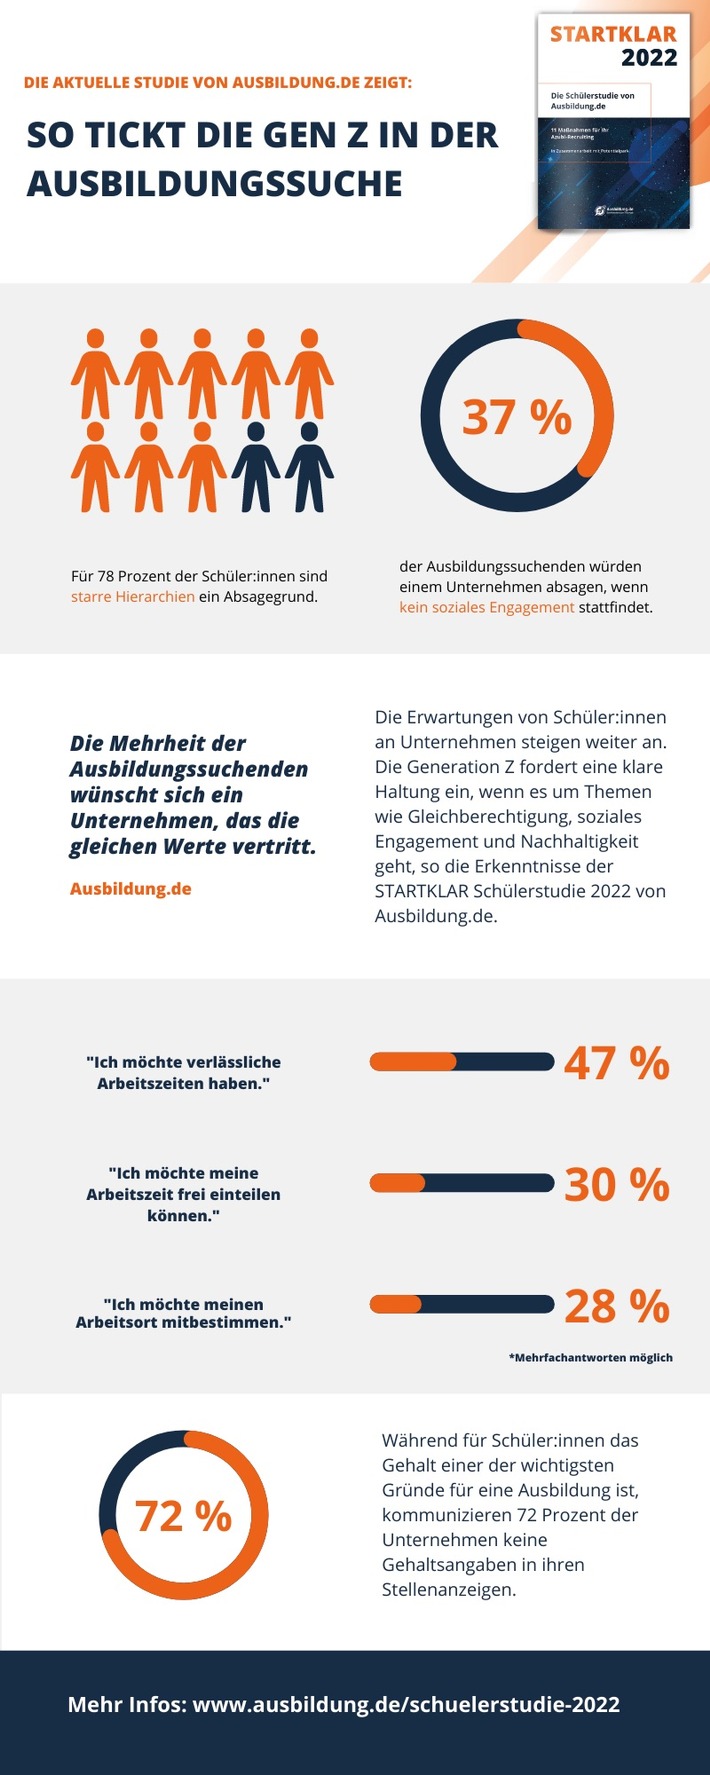 STARTKLAR 2022_Schulerstudie_Infografik_Ausbildung.de.jpg